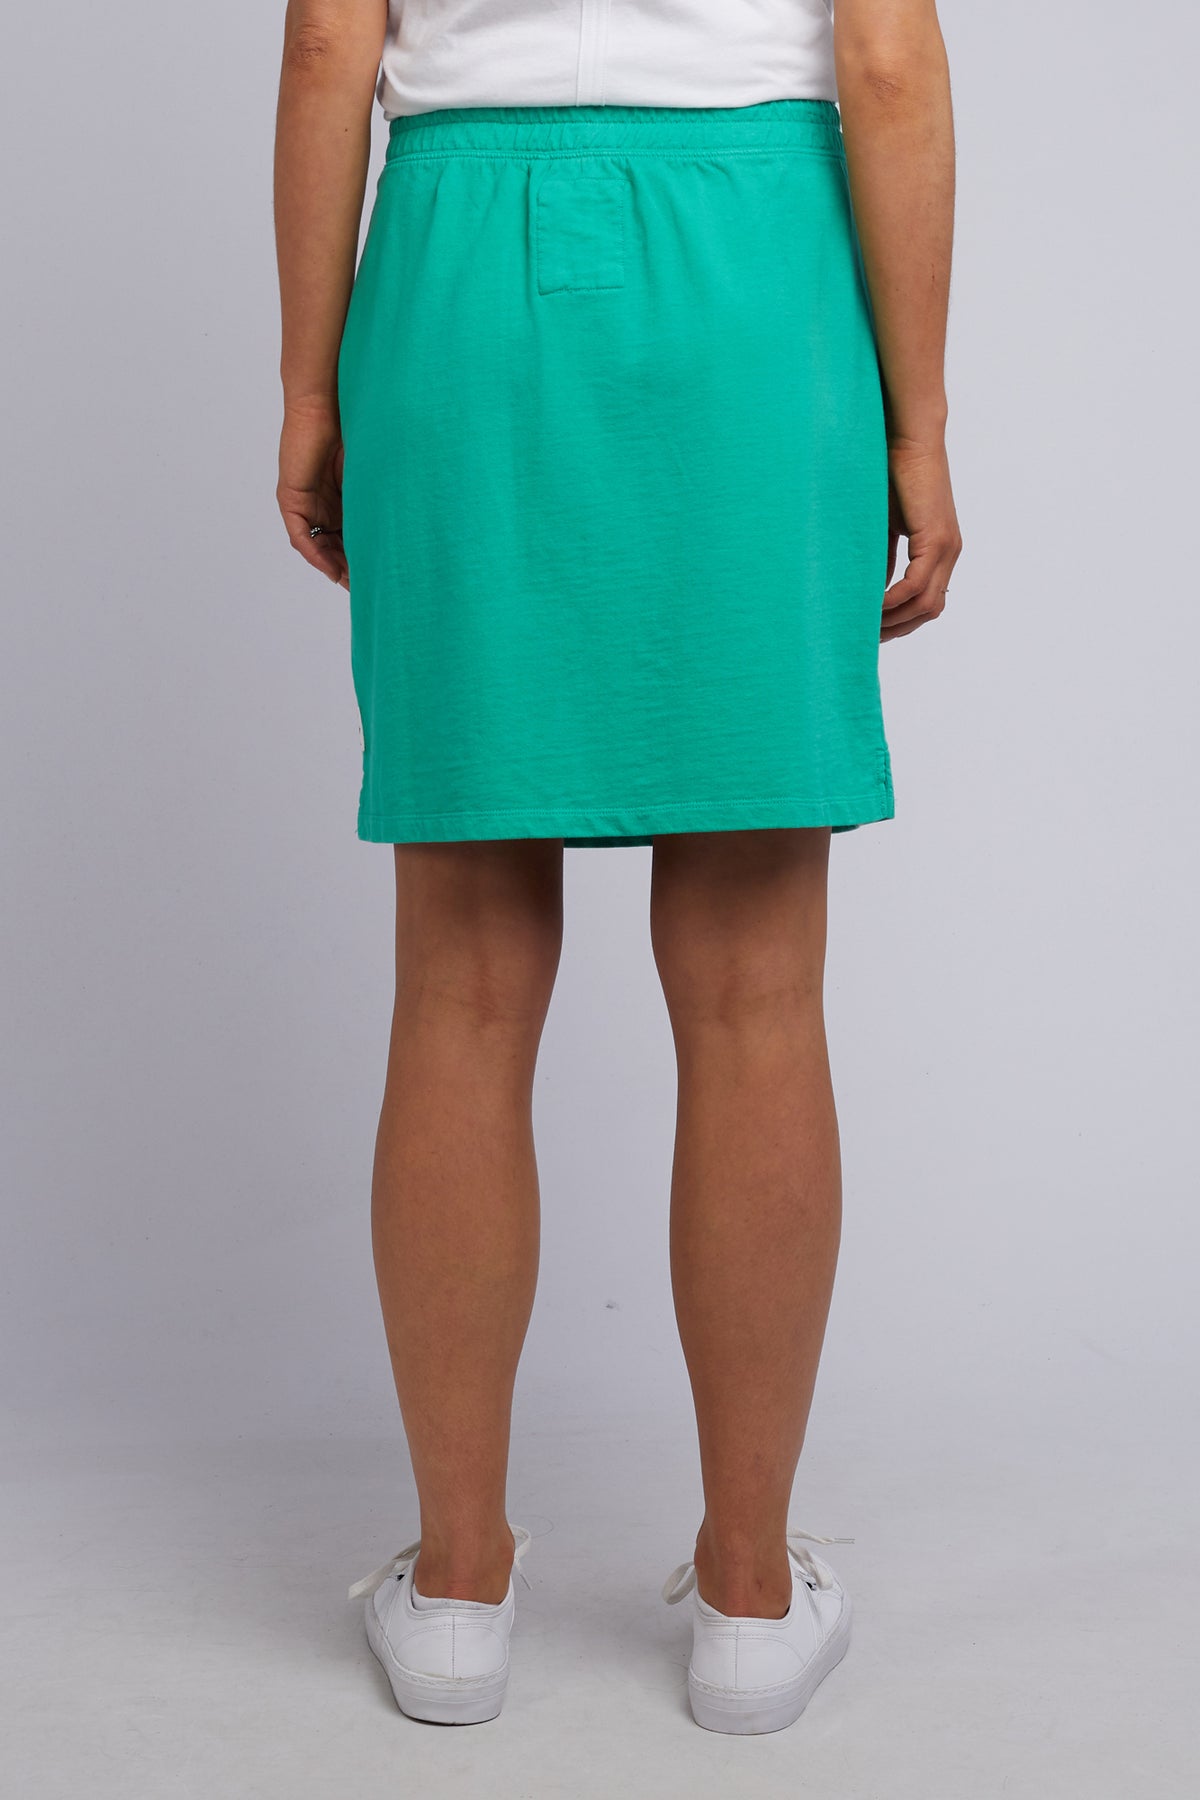 Cassie Skirt Bright Green